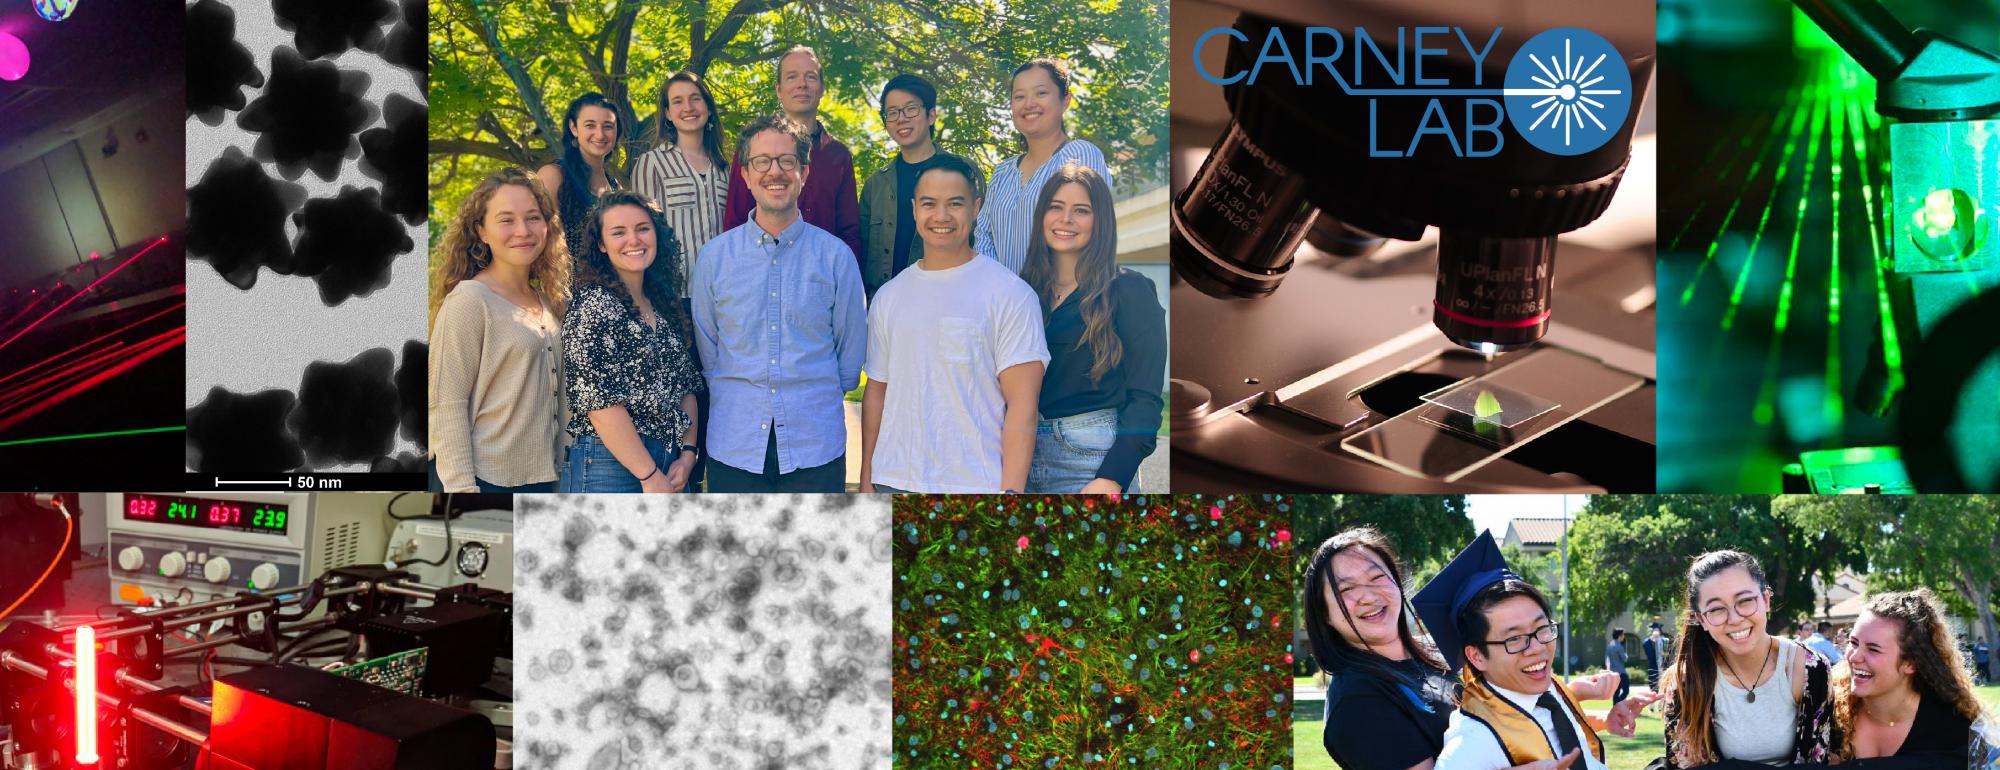 Carney lab header 2022